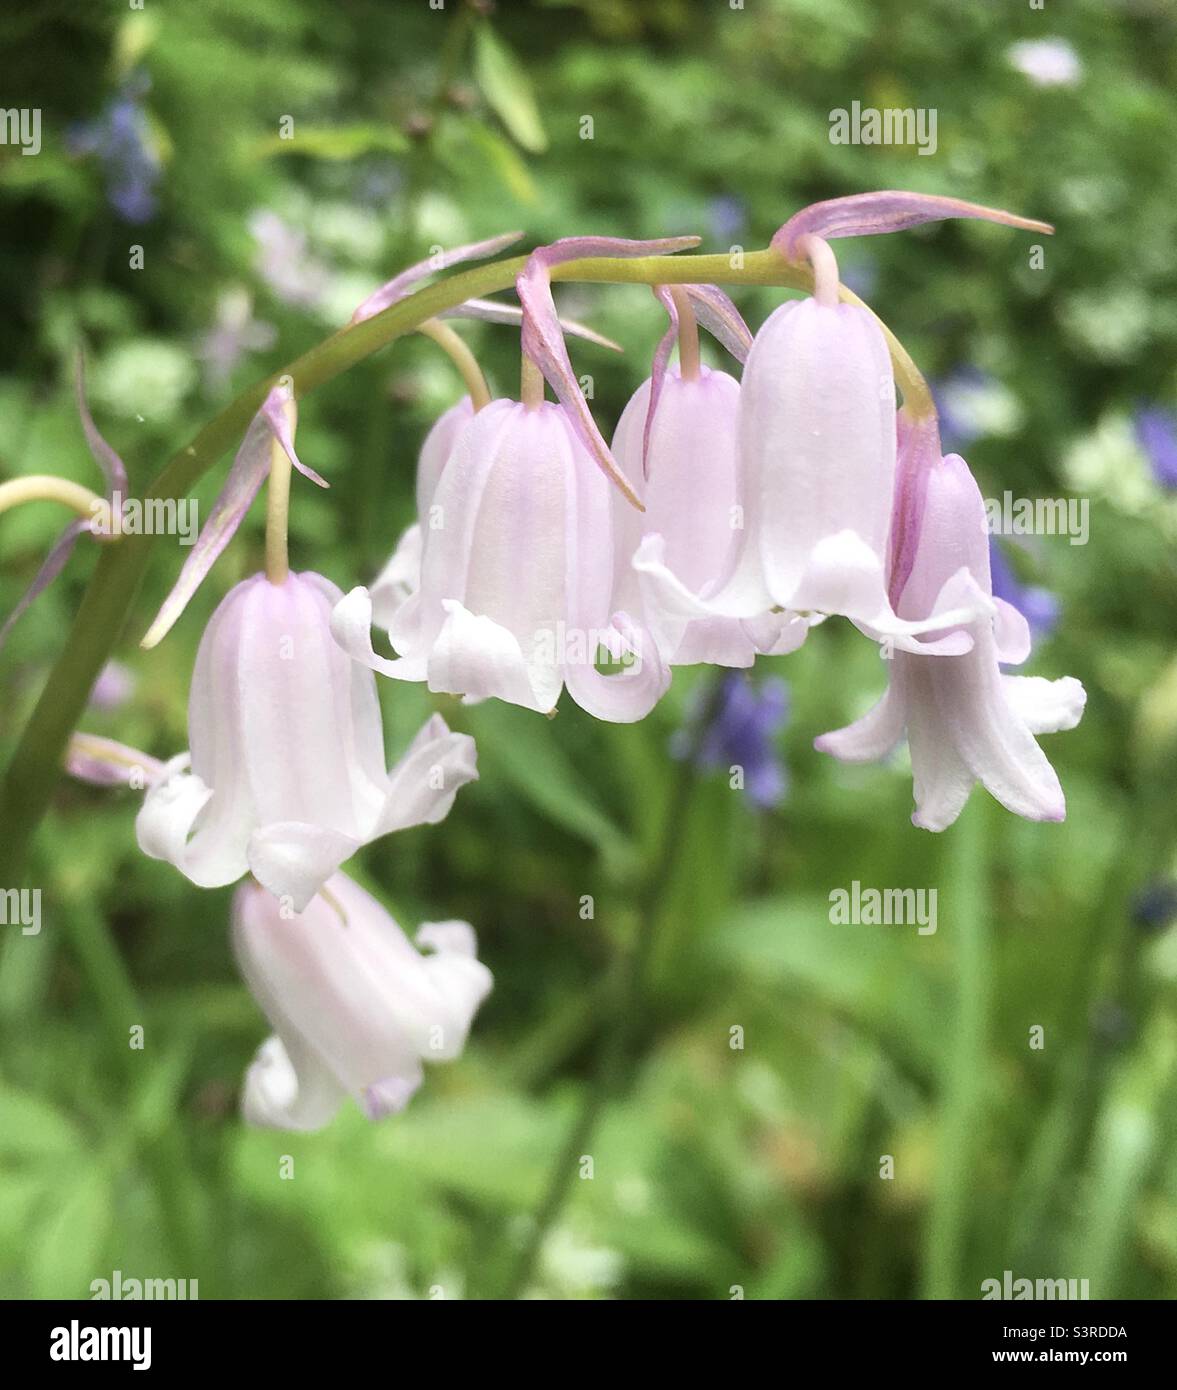 Flowers, gentleness, pink, white, green, garden, nature Stock Photo